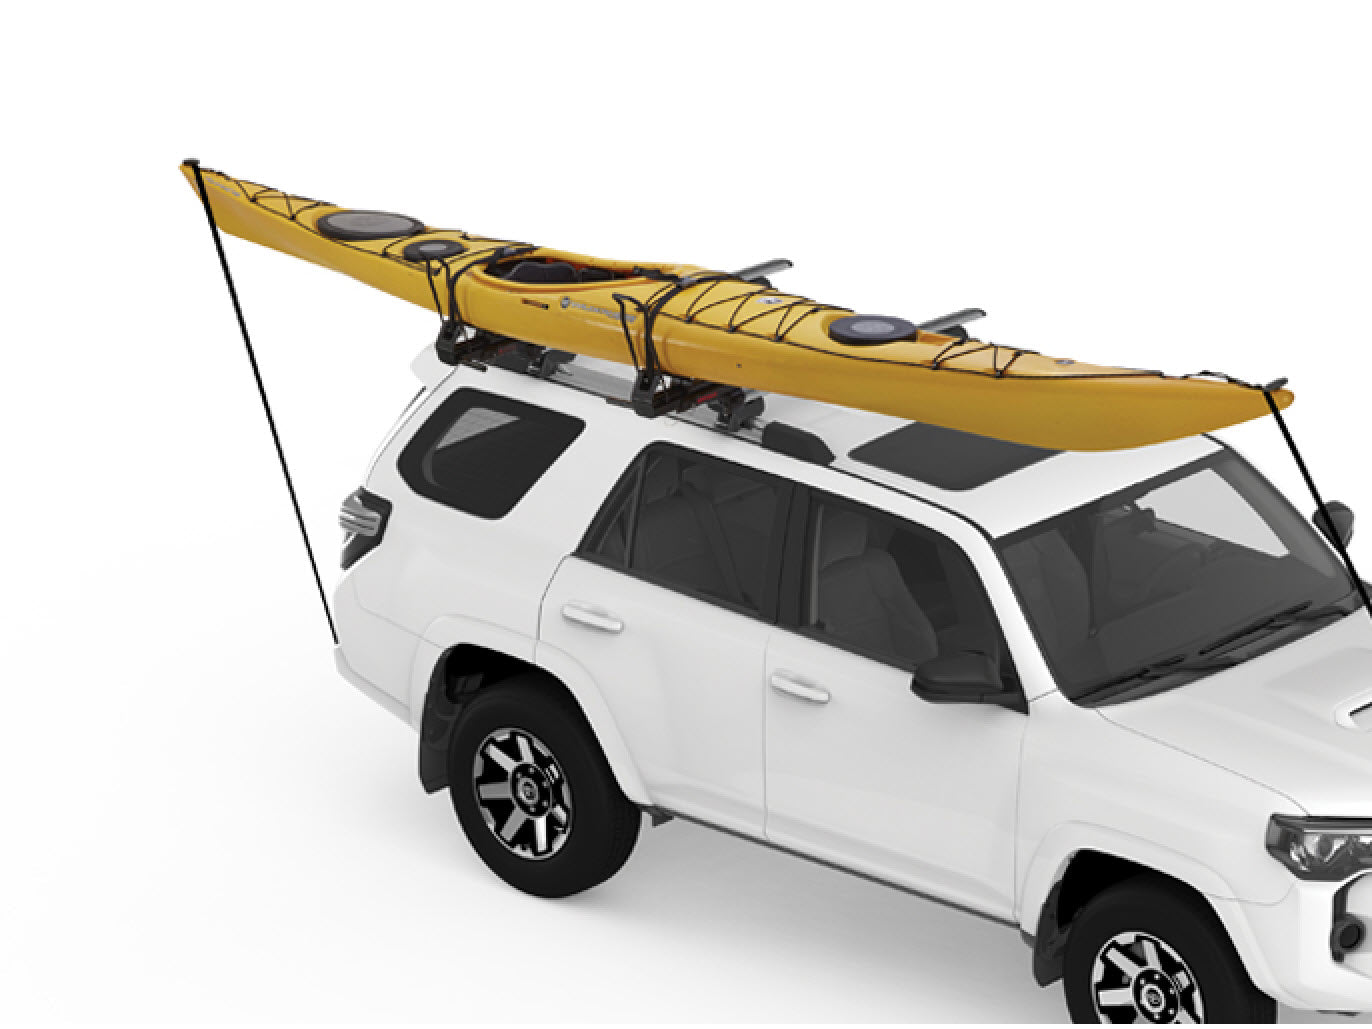 Yakima ShowDown Kayak and SUP Carrier loaded with kayak